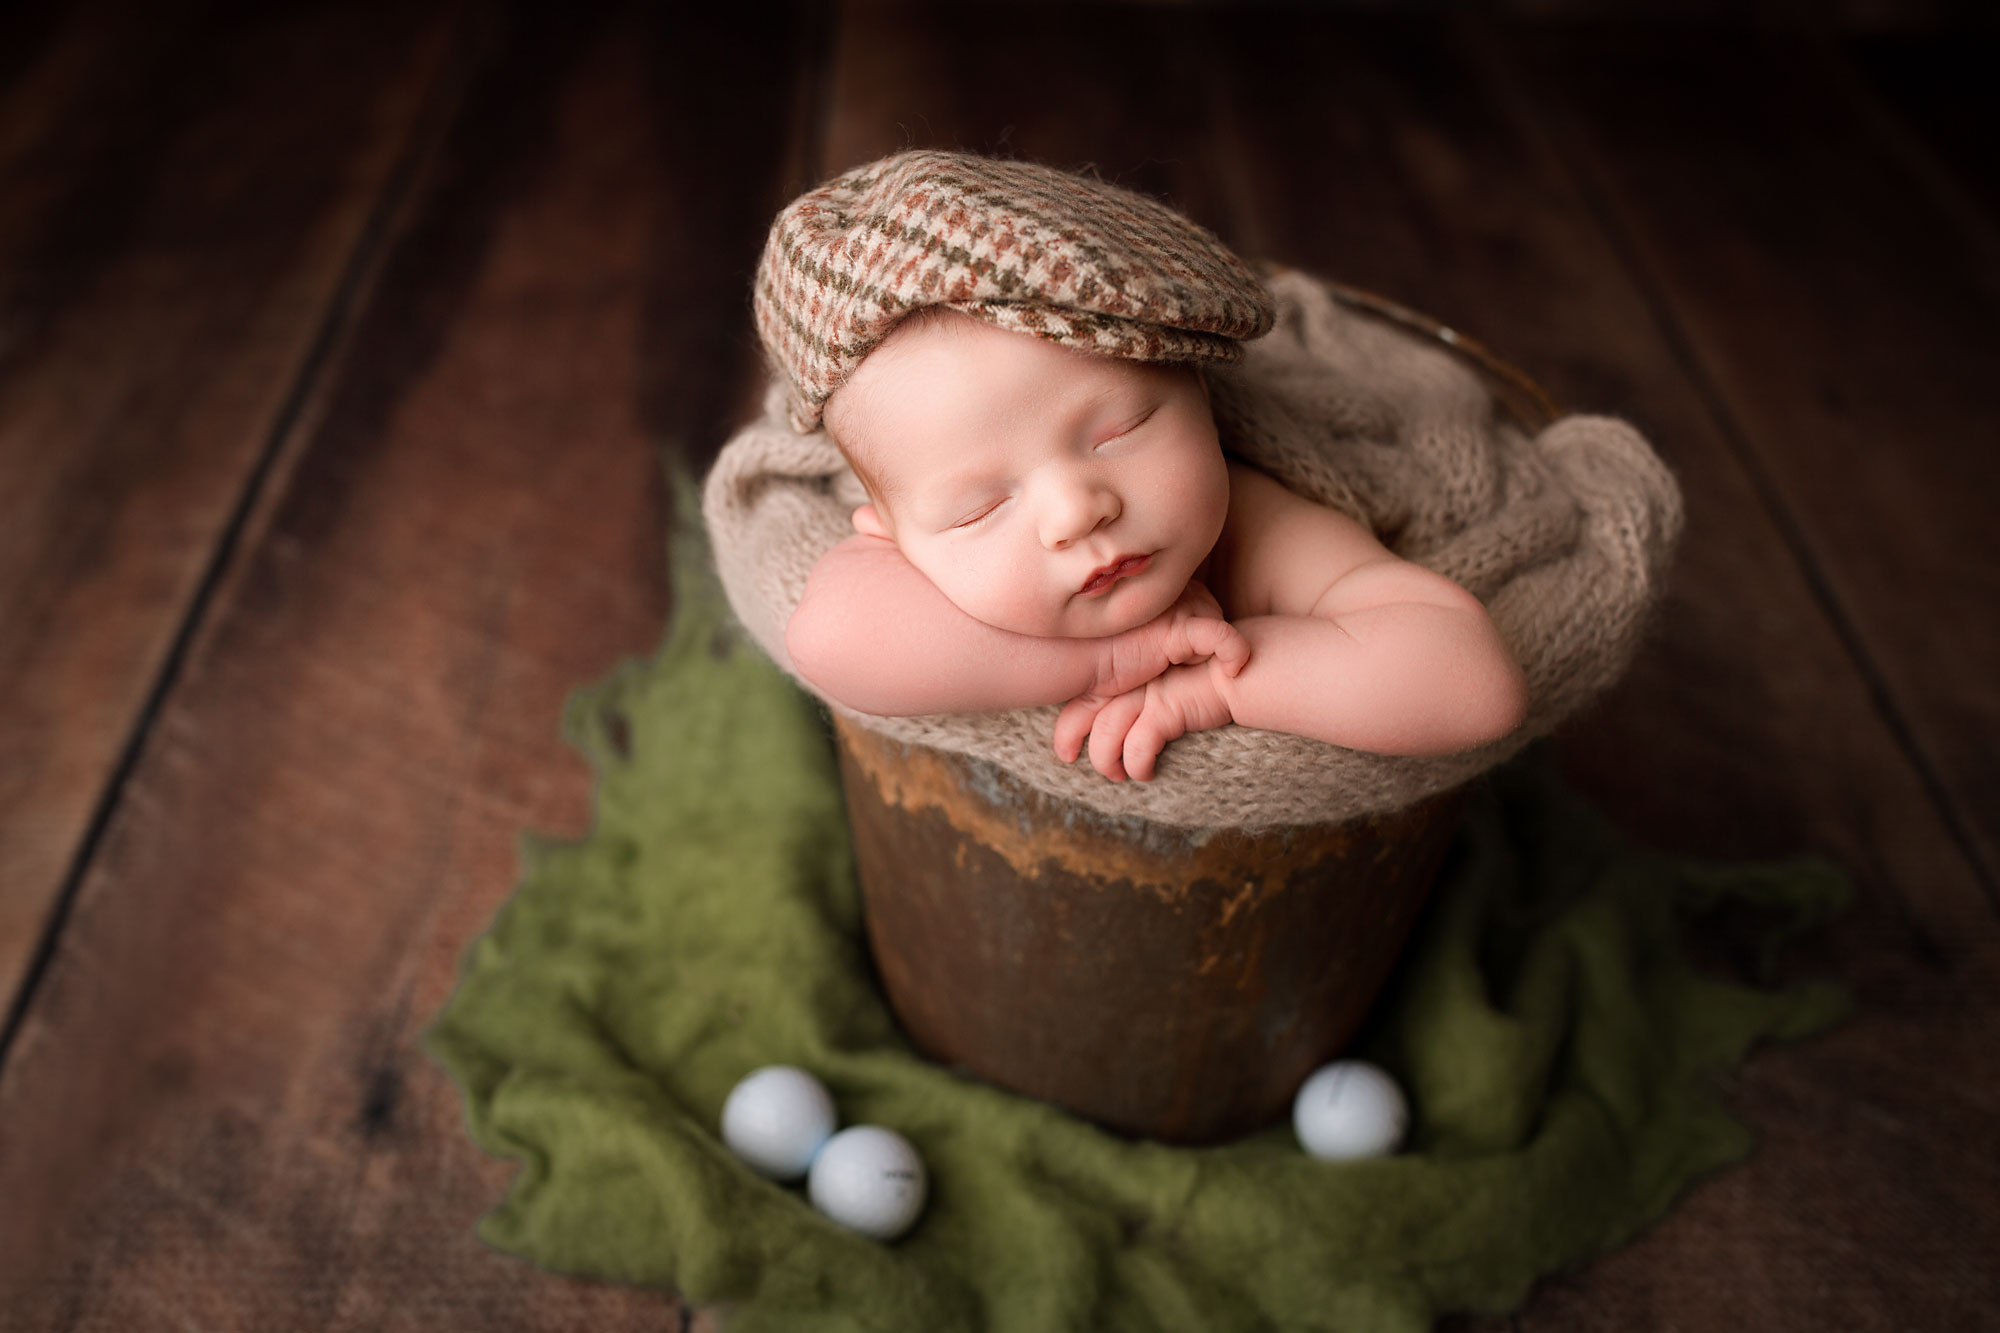 newborn photography session flemington nj, baby boy asleep in rustic bucket wearing flat cap with golf balls next to him